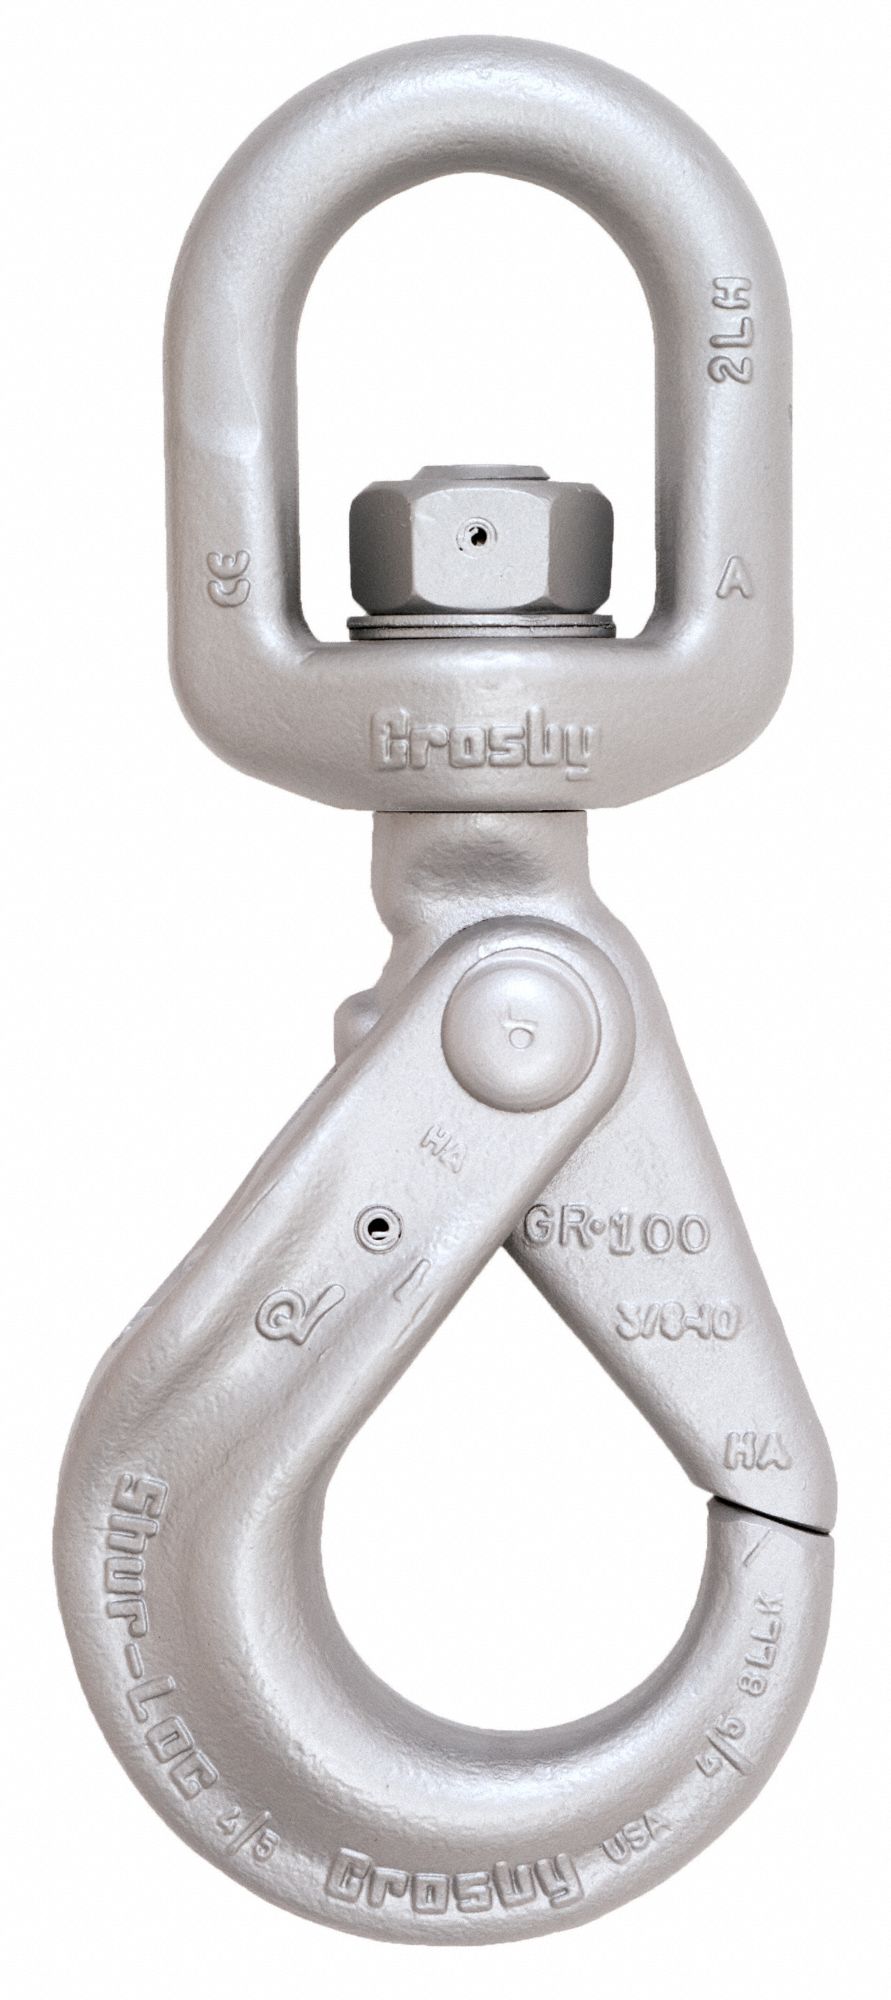 X100® Grade 100 Swivel Self Locking Hook with Bronze Bushing